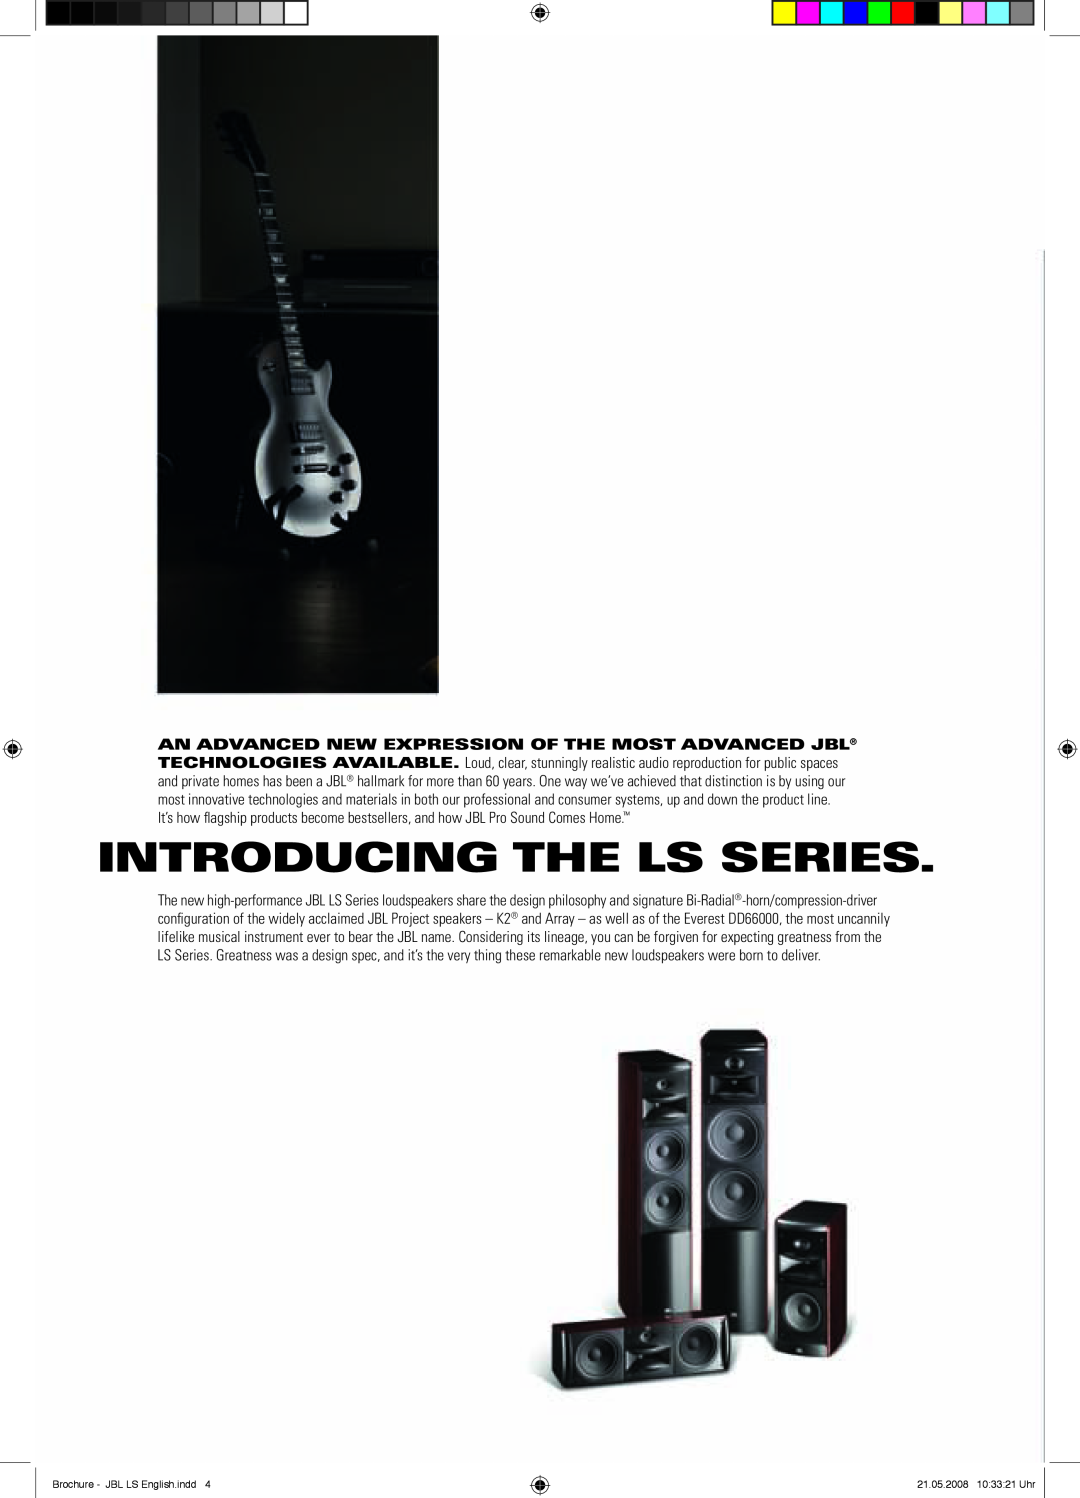 JBL LS Series brochure Introducing The Ls Series, Brochure - JBL LS English.indd, 21.05.2008 10 33 21 Uhr 